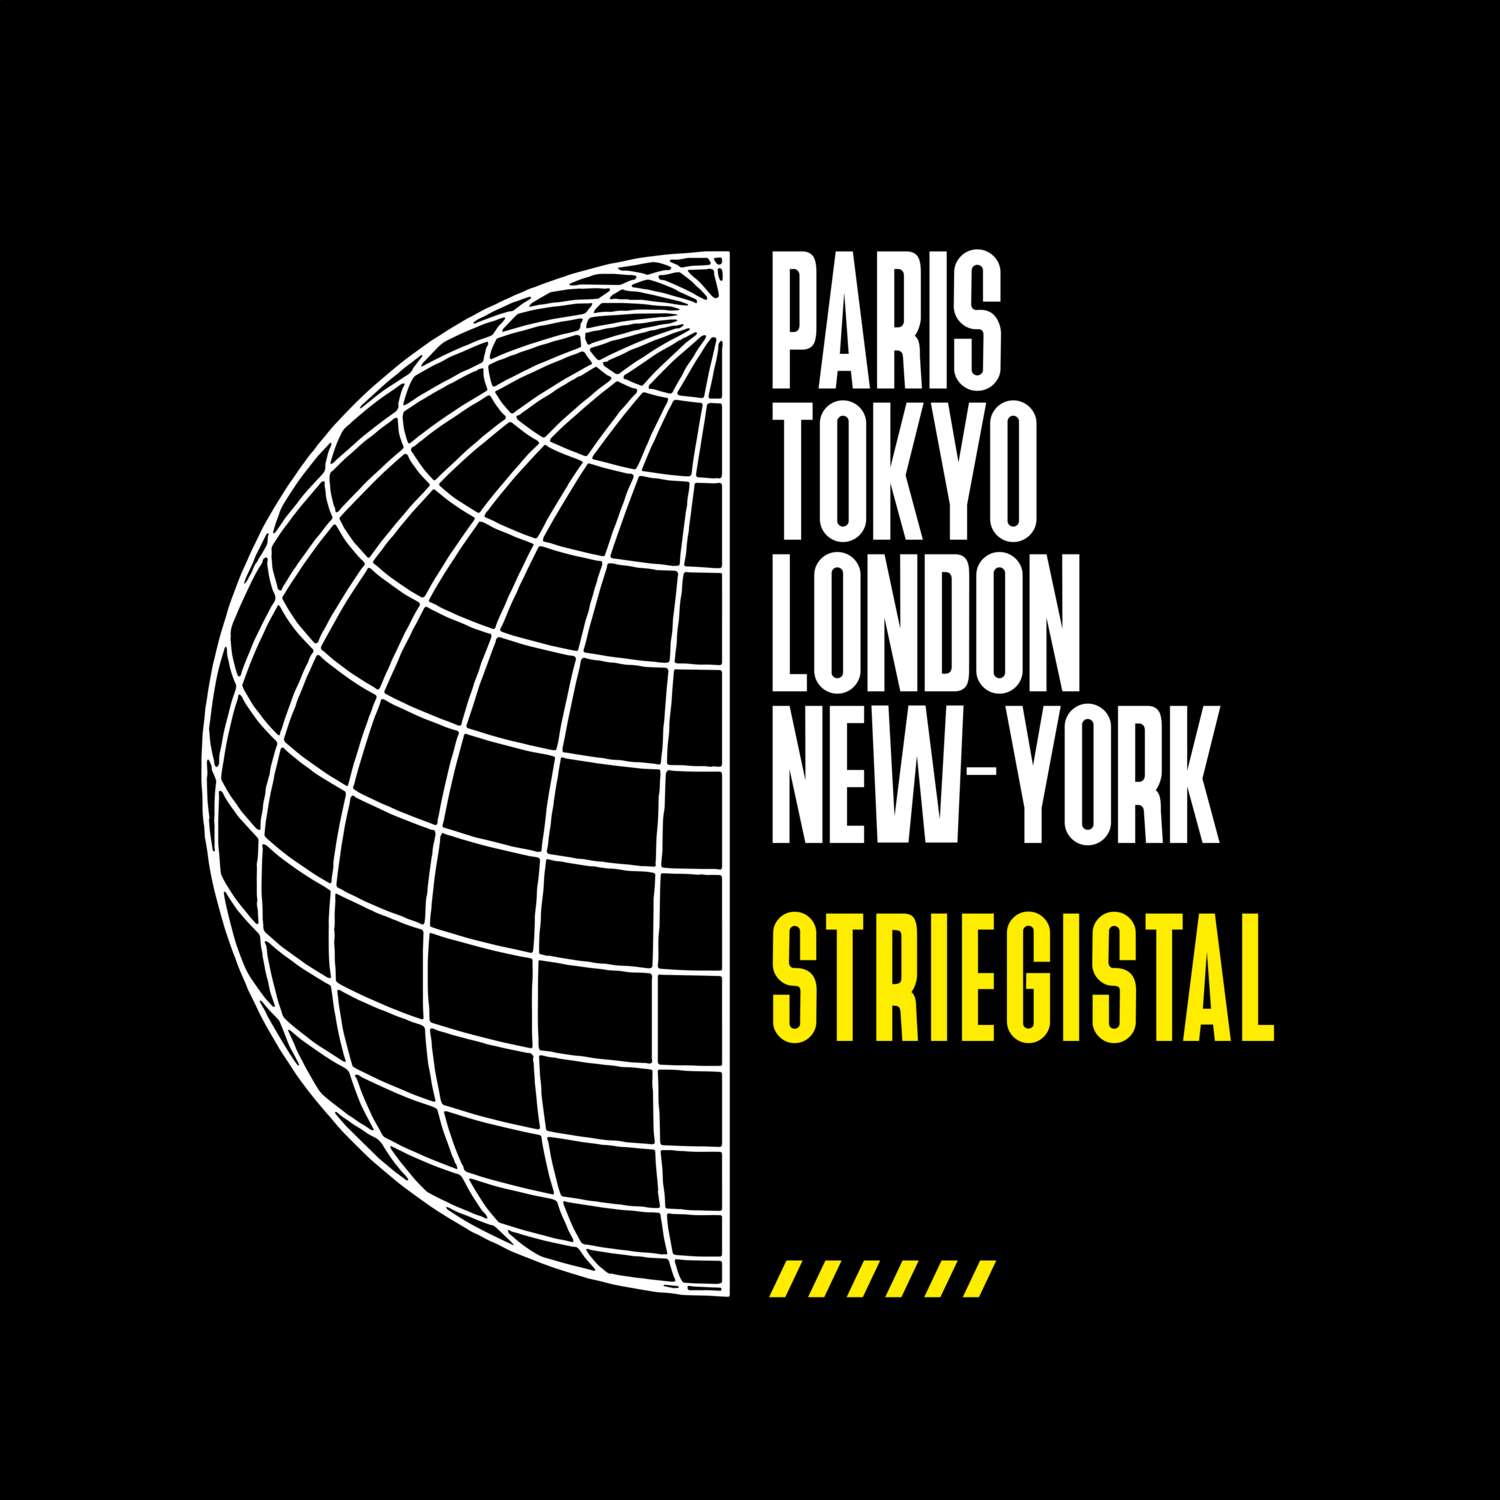 Striegistal T-Shirt »Paris Tokyo London«